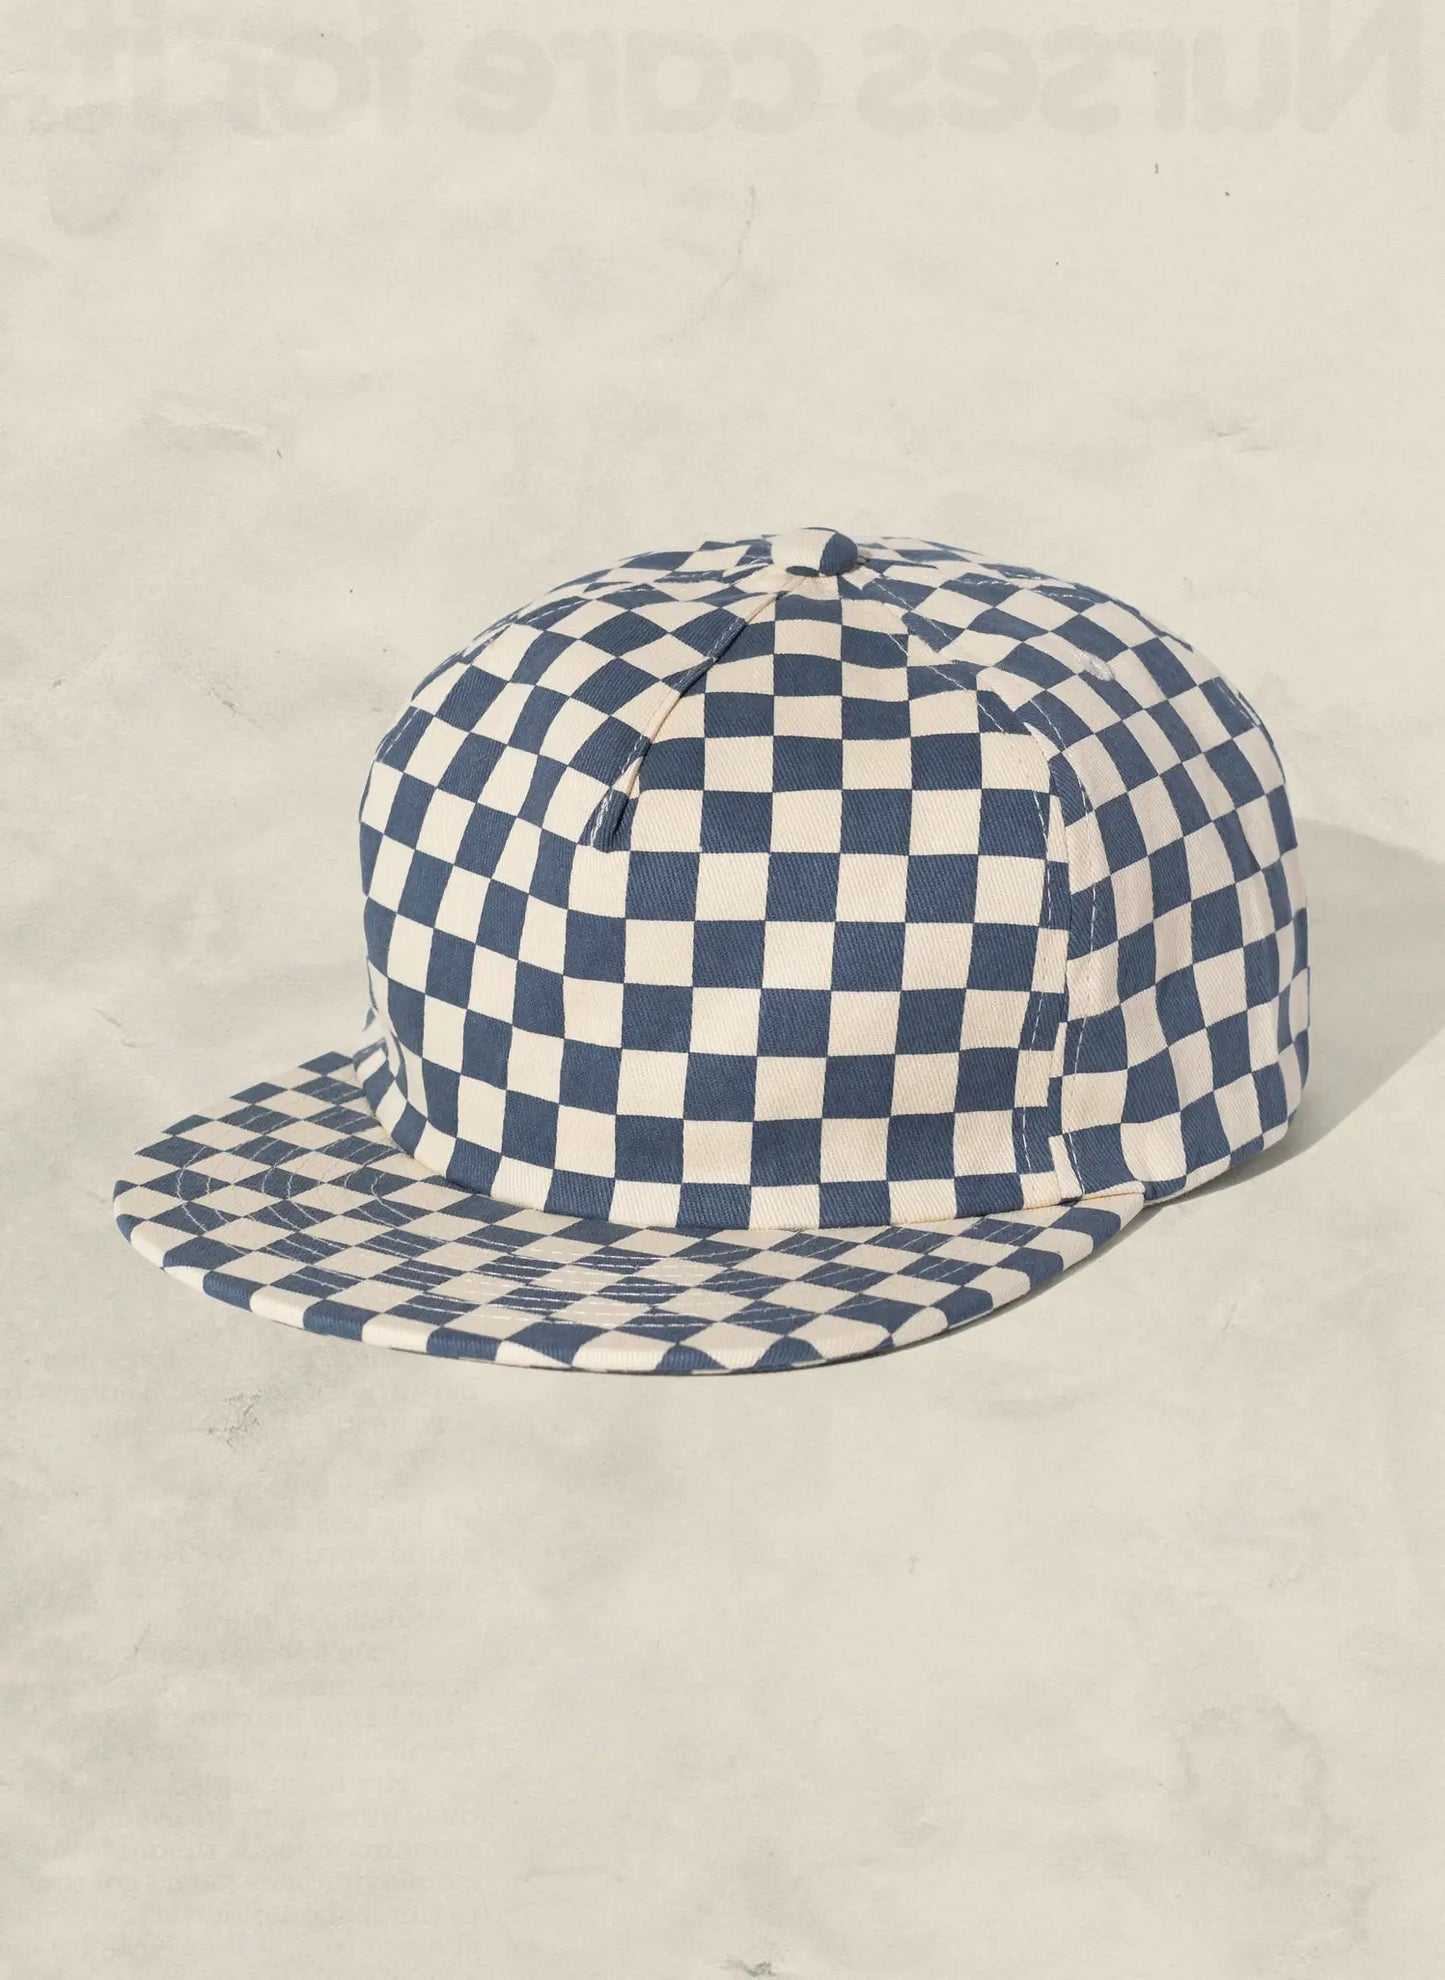 Checkerboard Field Trip Hat by WELD MFG